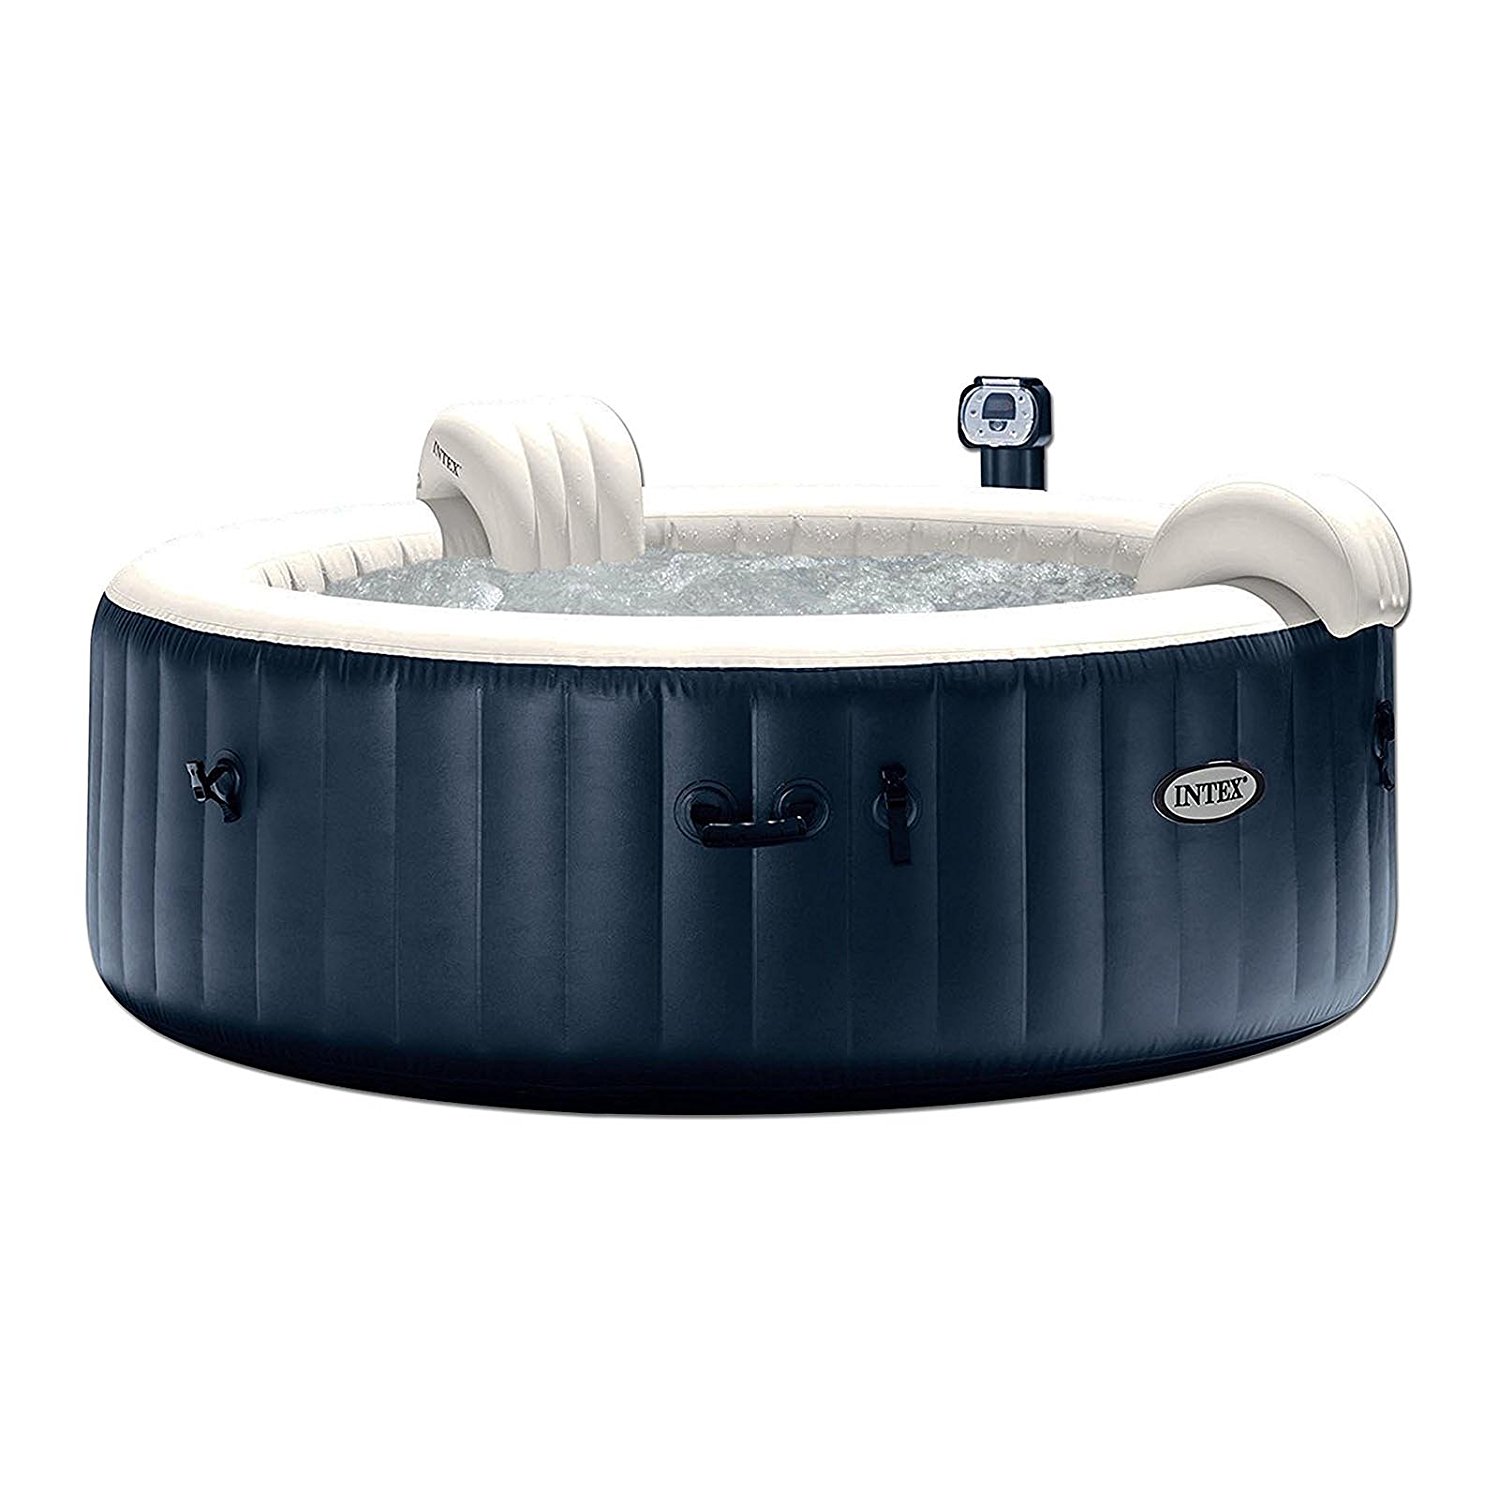 Intex pure spa 6-person inflatable portable heated bubble hot tub, black, 28409E